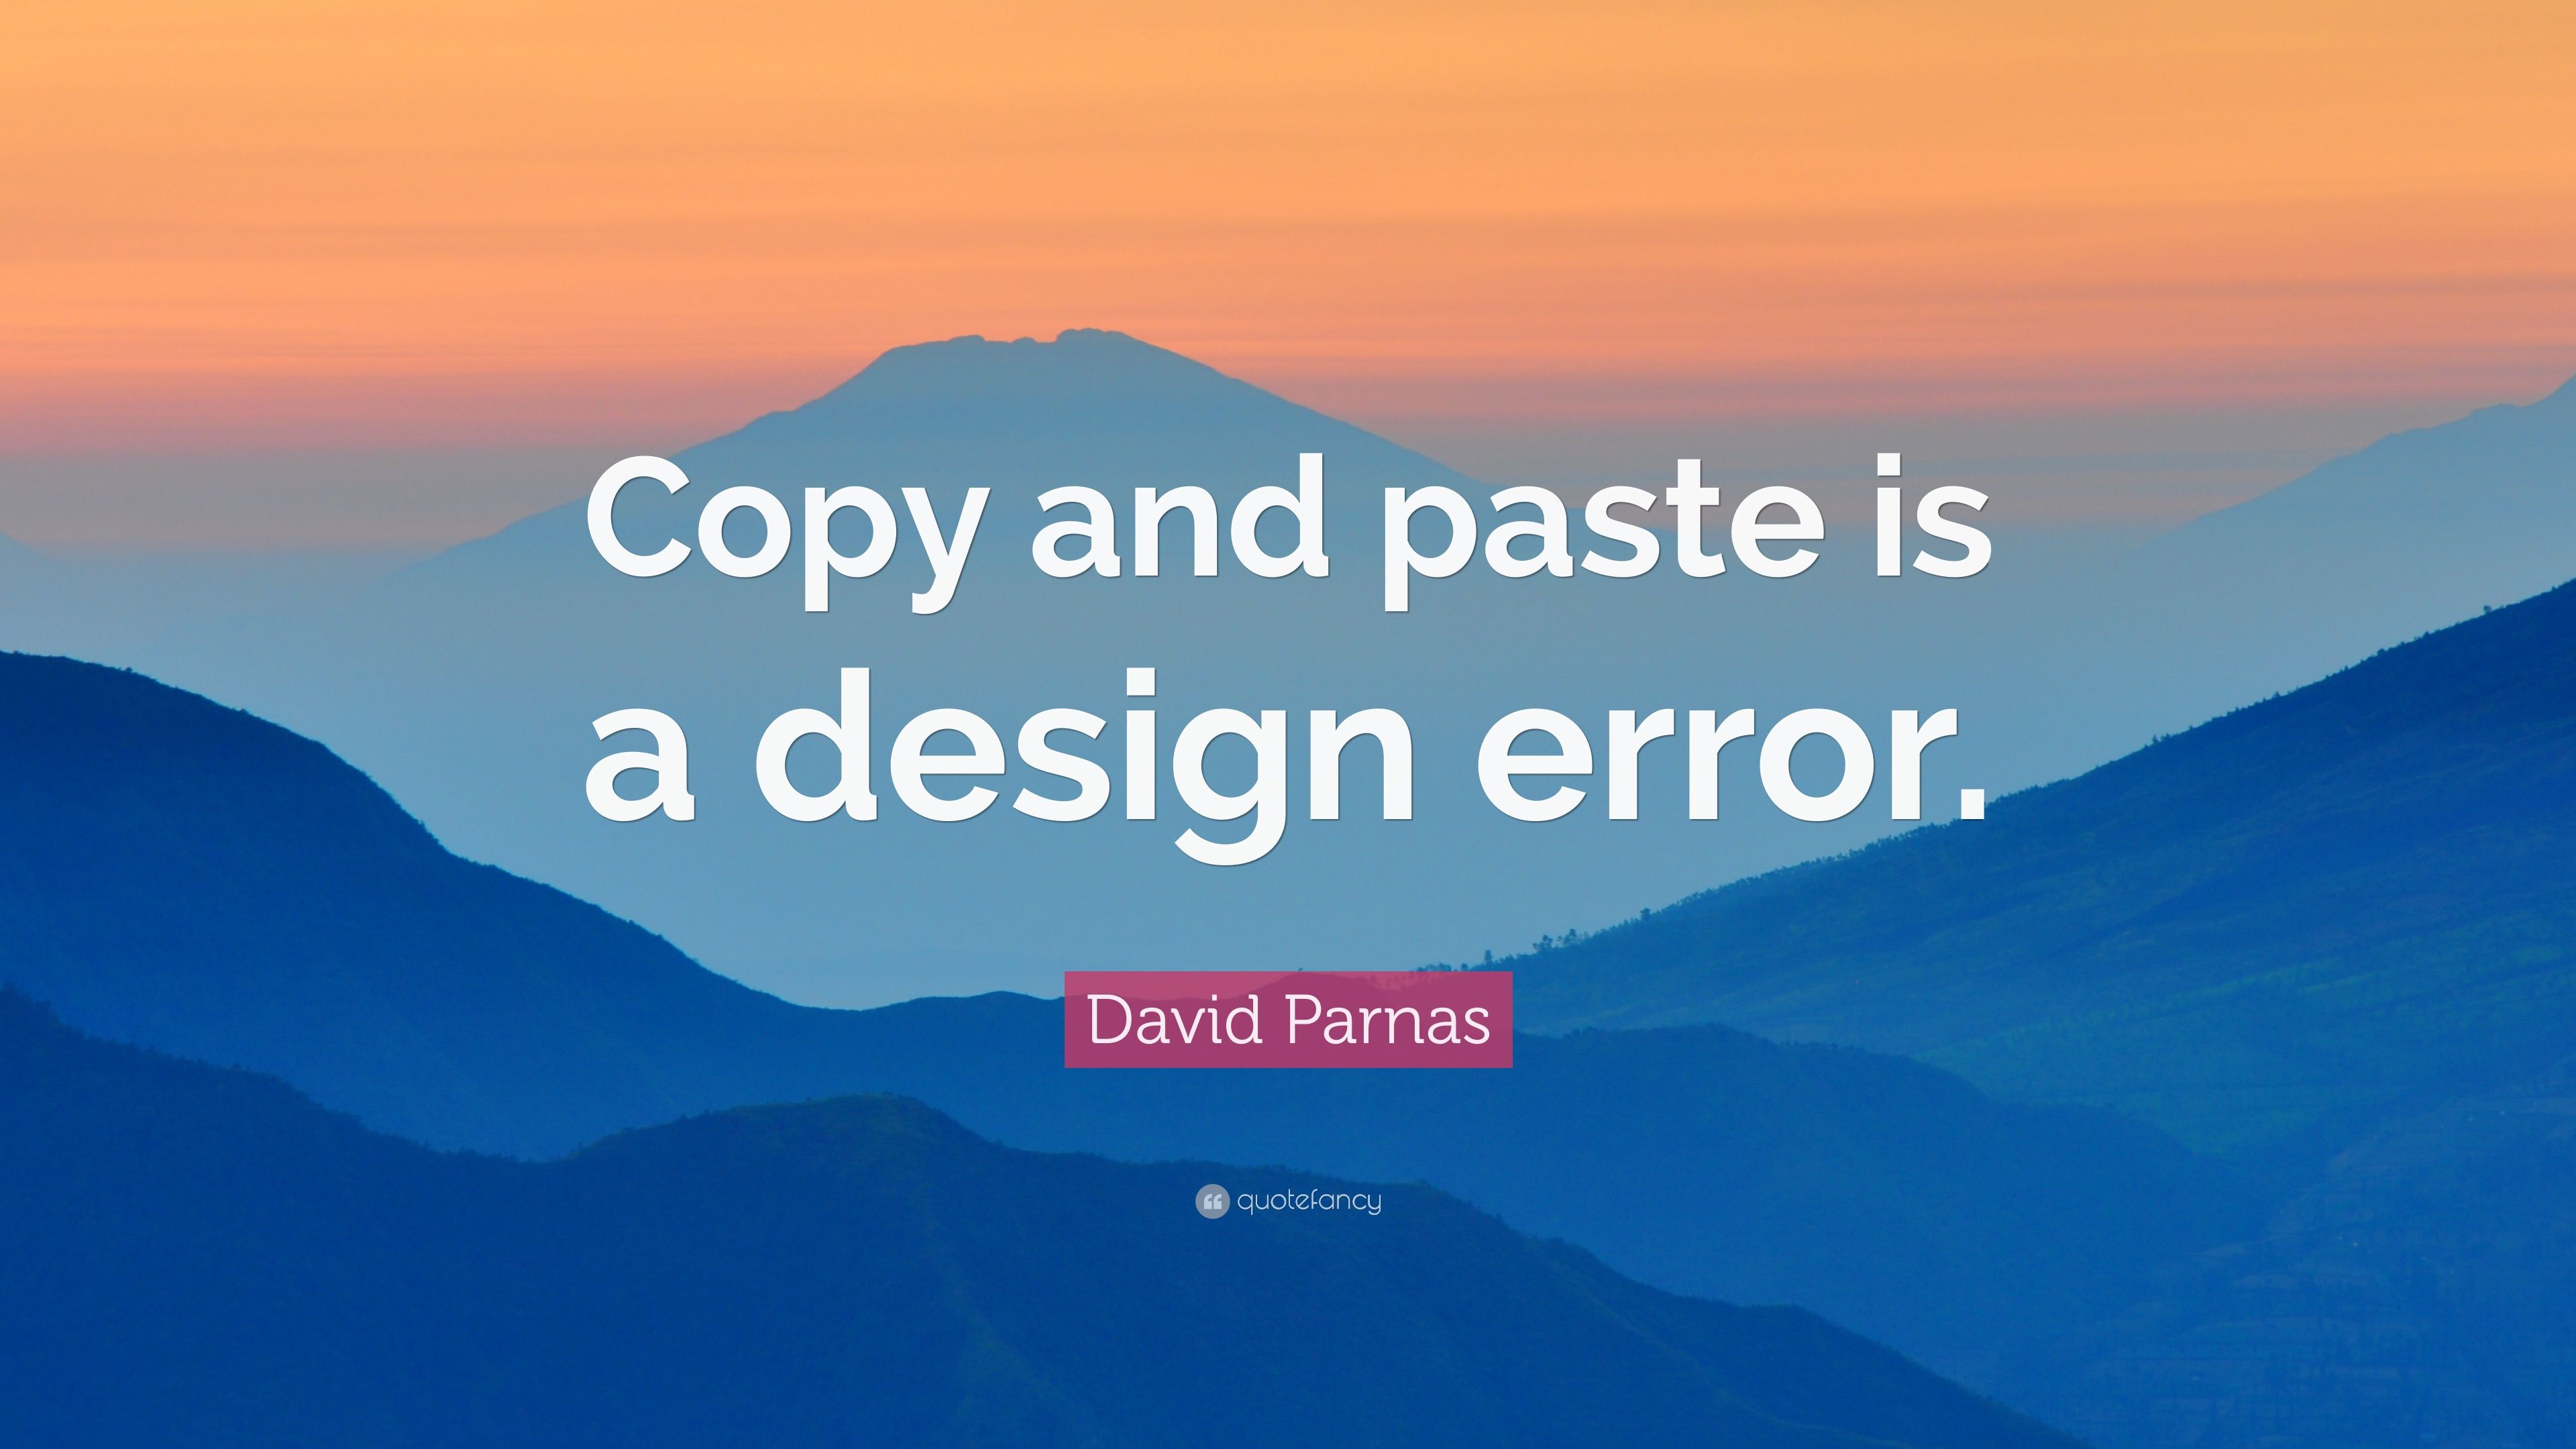 David Parnas Quote: “Copy and paste is a design error.” (9 wallpaper)